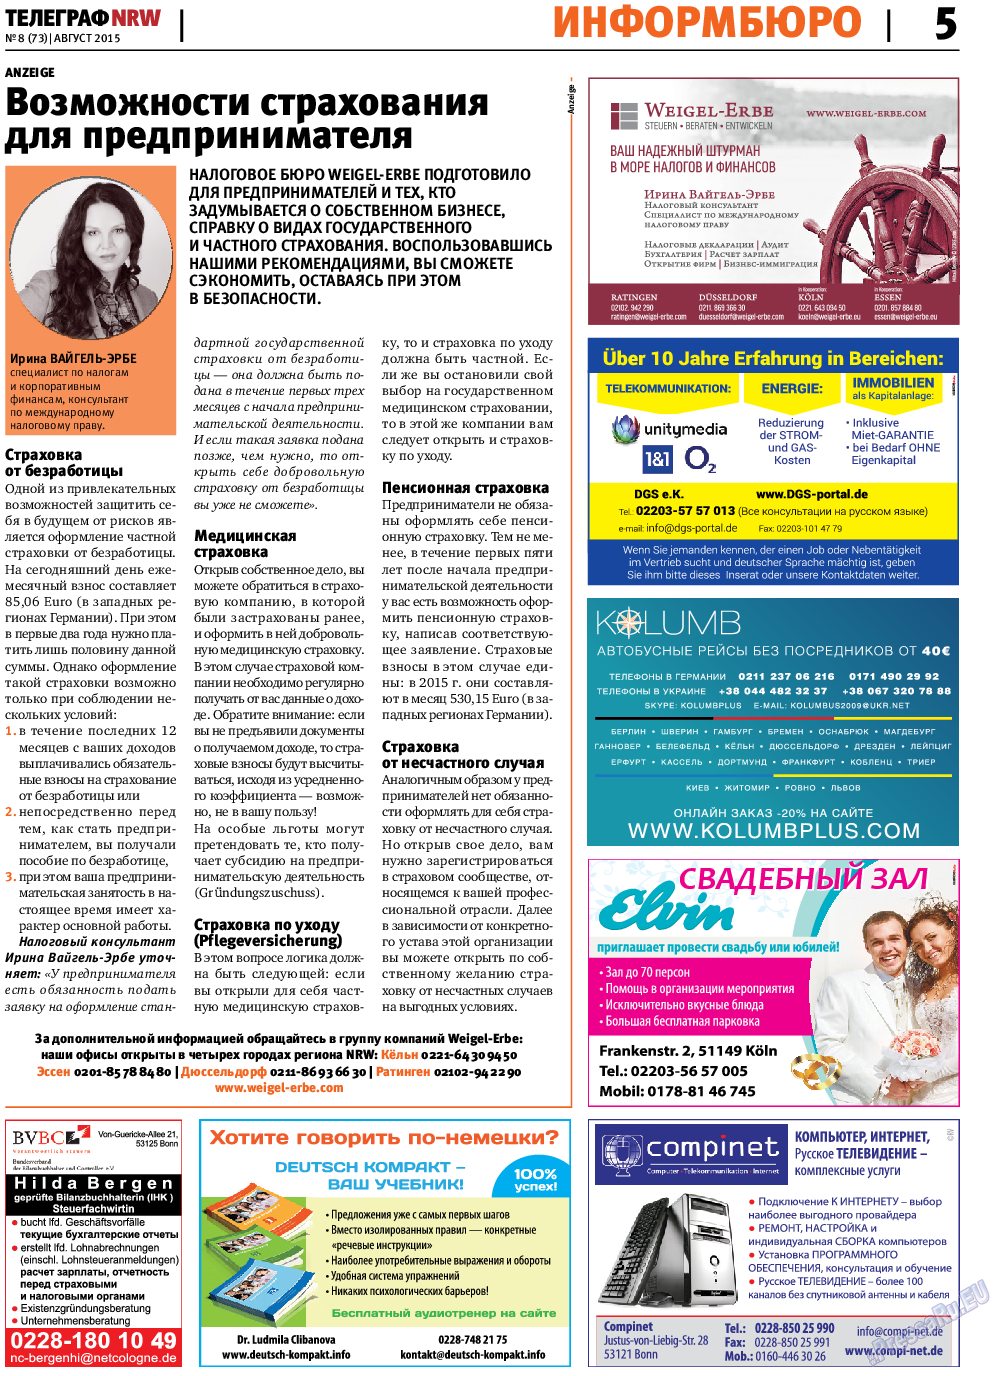 Телеграф NRW, газета. 2015 №8 стр.5